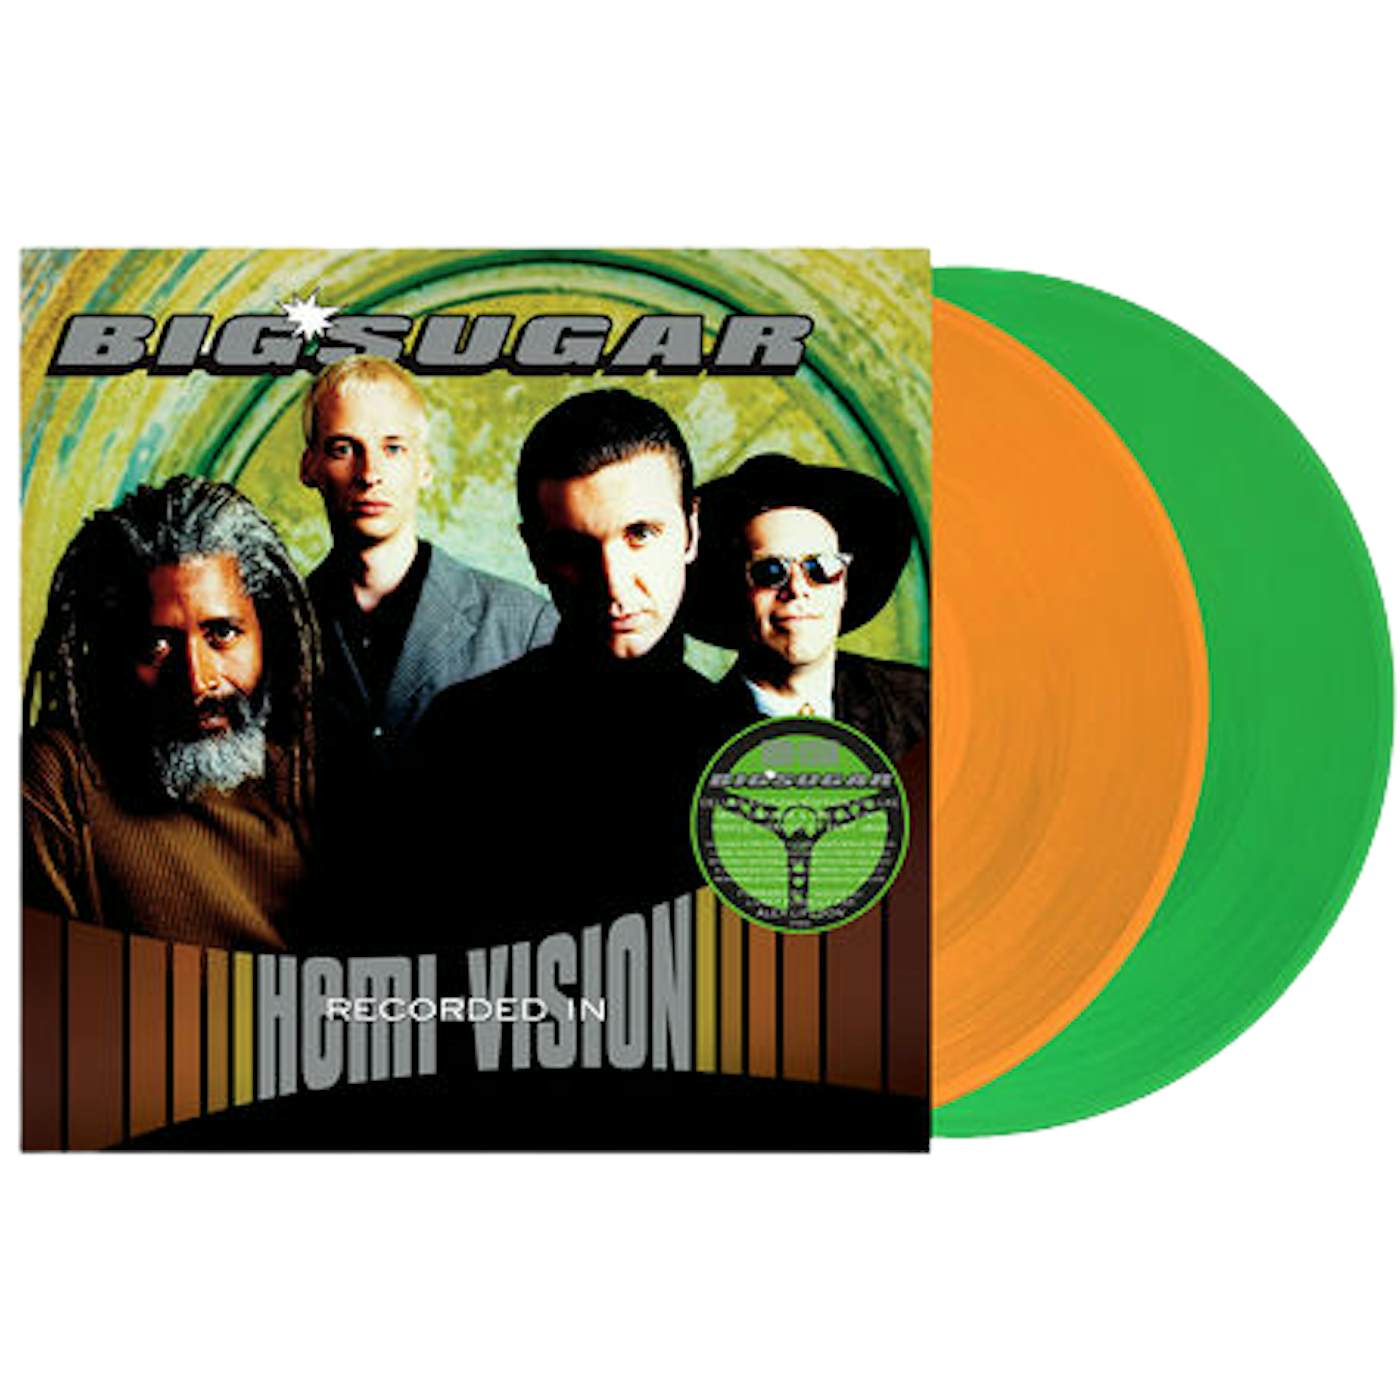 Big Sugar Hemi-Vision Deluxe Orange / Green 2LP